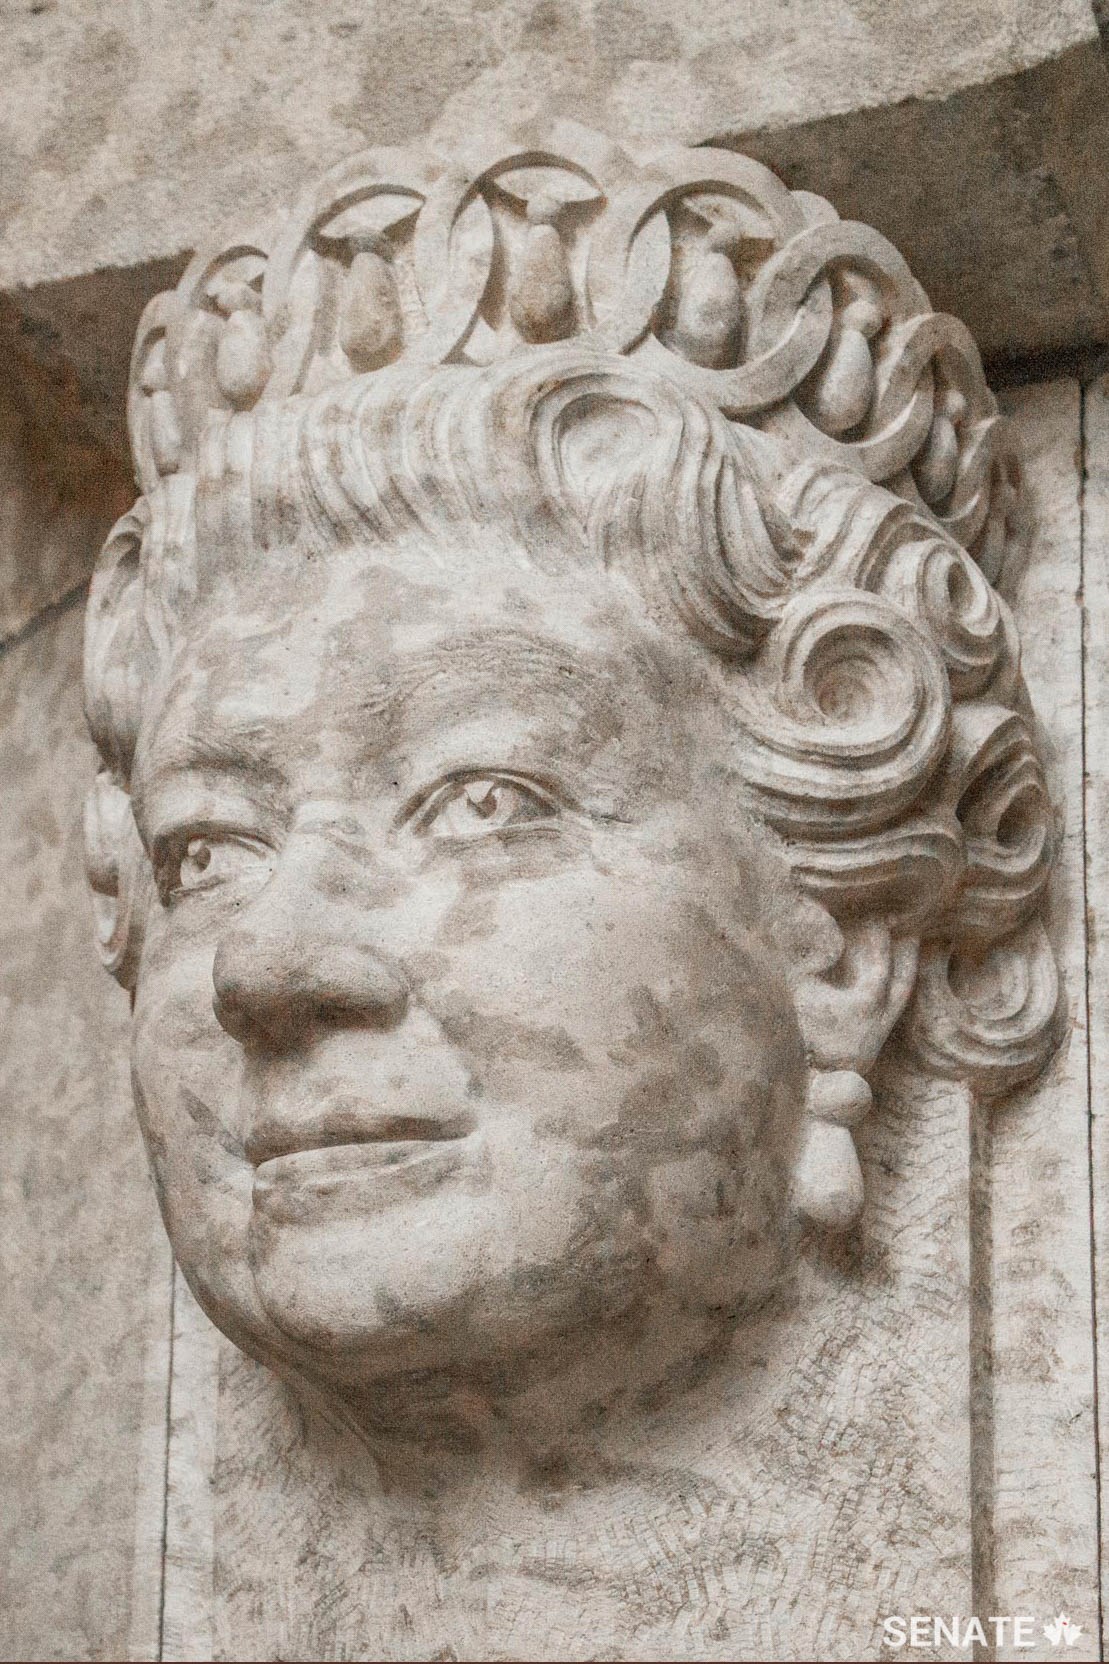 This portrait head of Queen Elizabeth II took its place among five other sculptures of her predecessors in 2010.